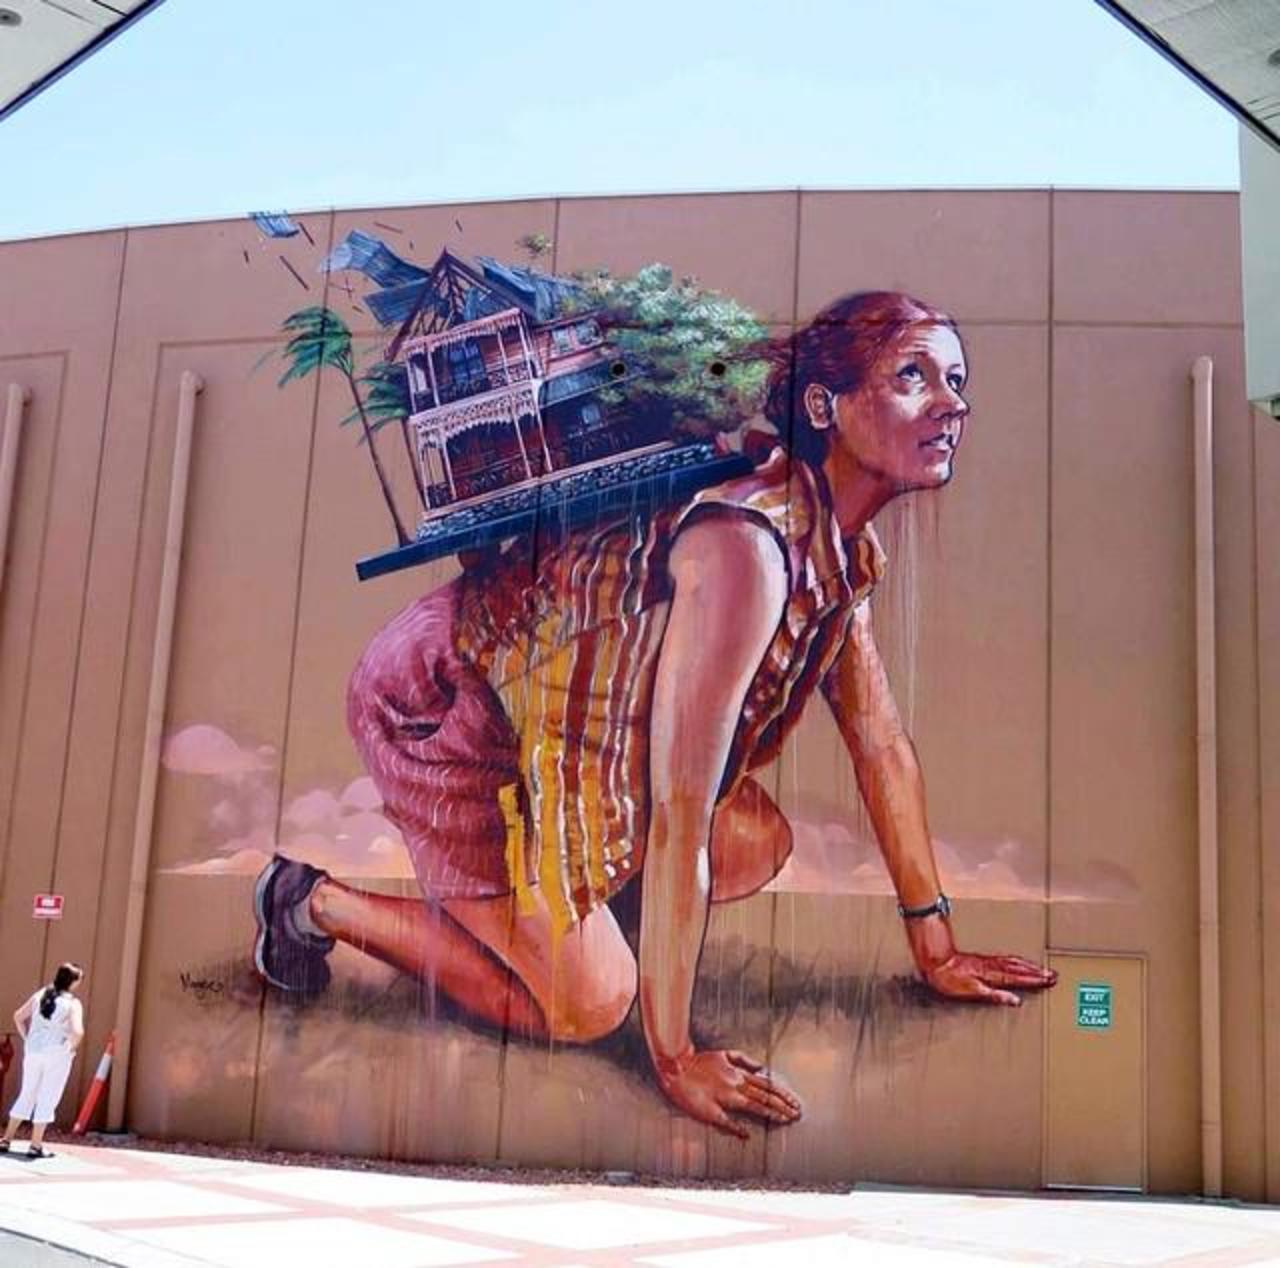 RT @GoogleStreetArt Latest Fintan Magee piece in Bunbury Western Australia
#art #graffiti #mural #streetart http://t.co/auhD3rrph3 @Gerrrty